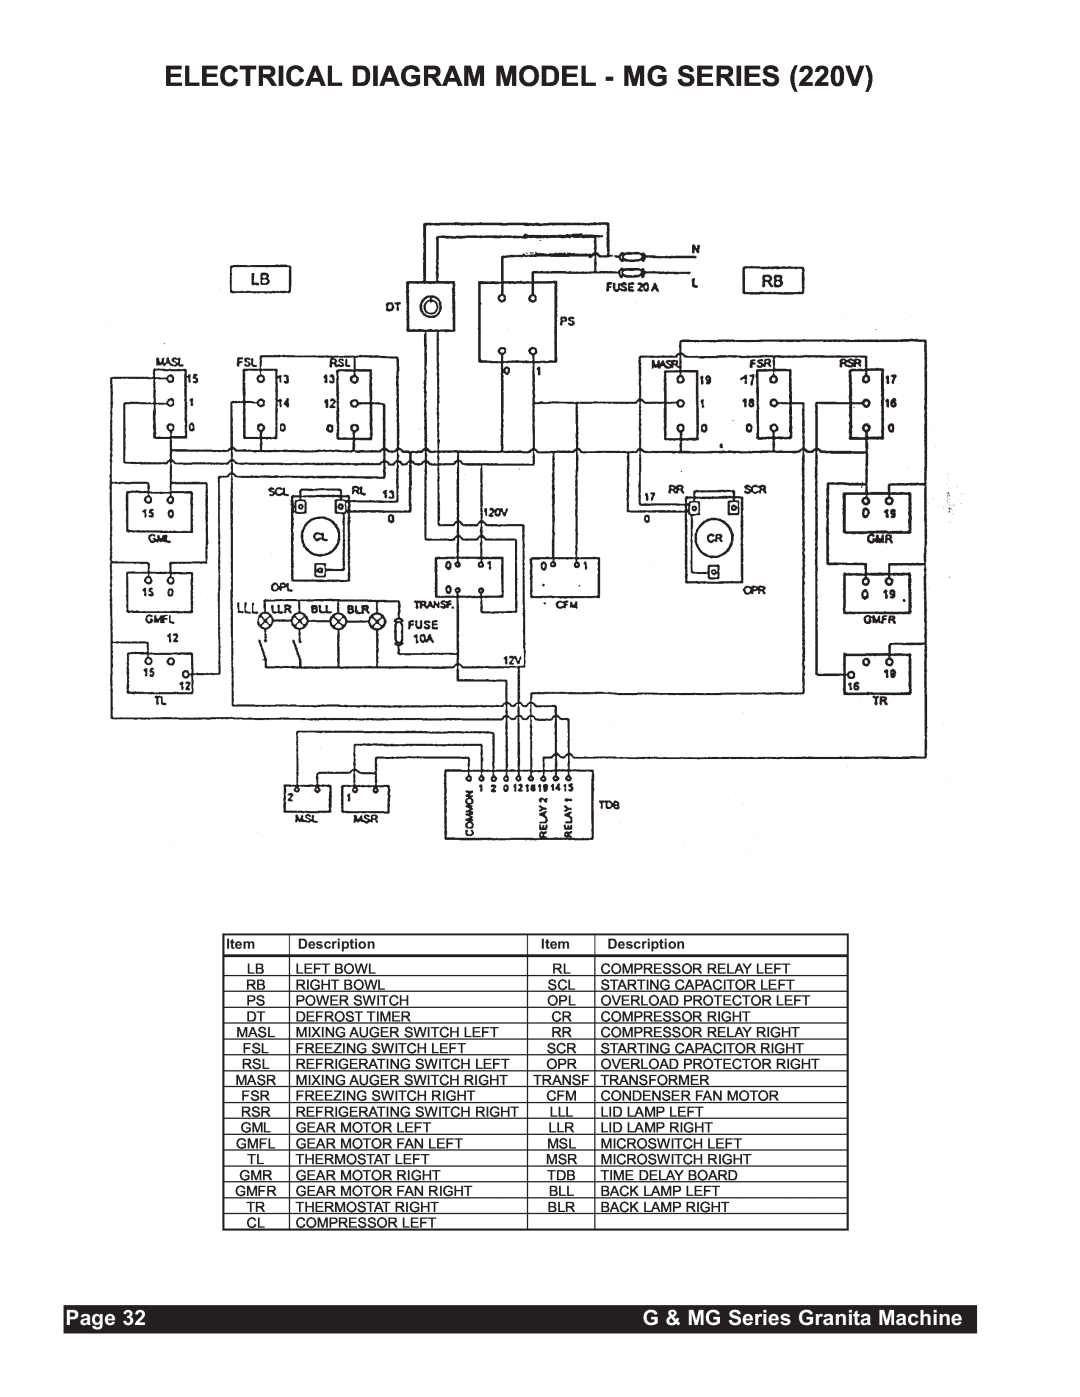 Grindmaster MG235-2B, MG236-2B Electrical Diagram Model - Mg Series, Page, G & MG Series Granita Machine, Description 